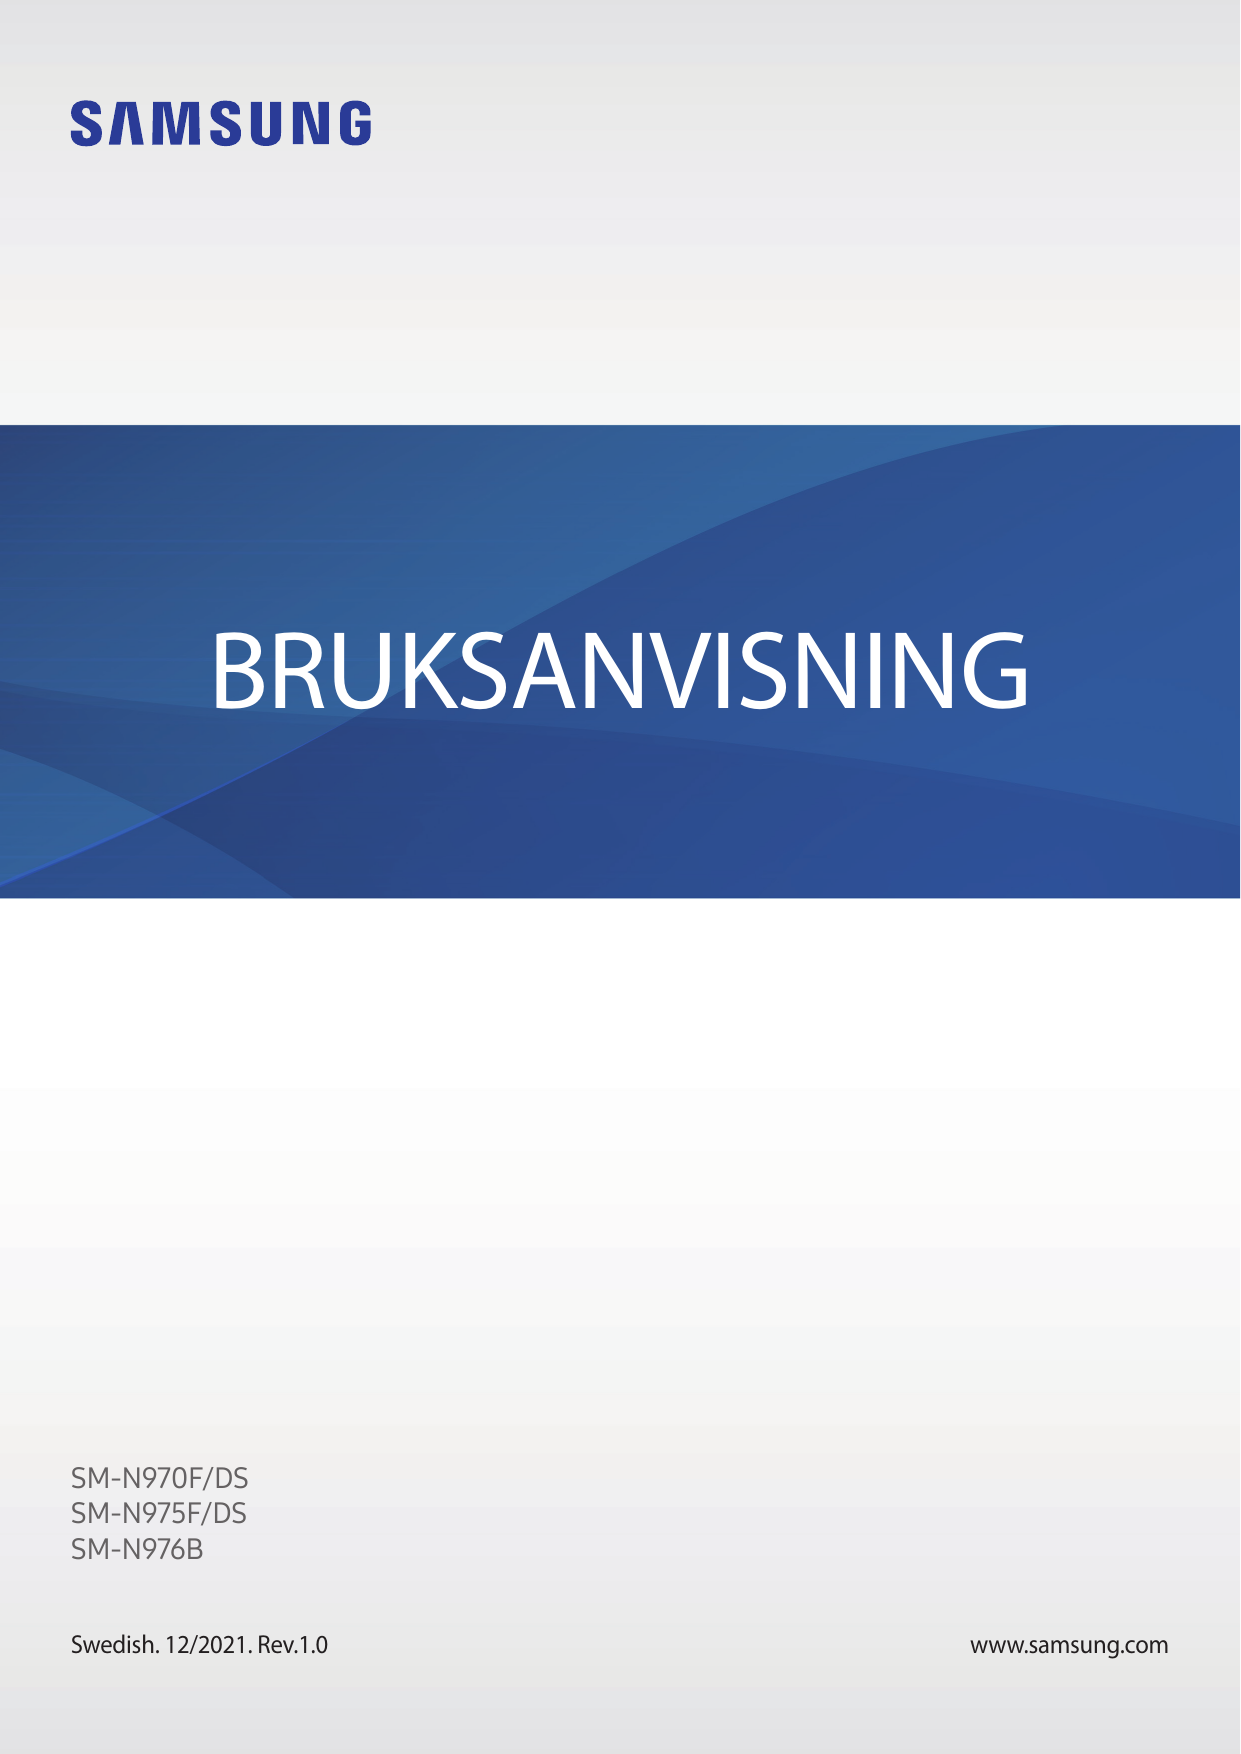 BRUKSANVISNINGSM-N970F/DSSM-N975F/DSSM-N976BSwedish. 12/2021. Rev.1.0www.samsung.com